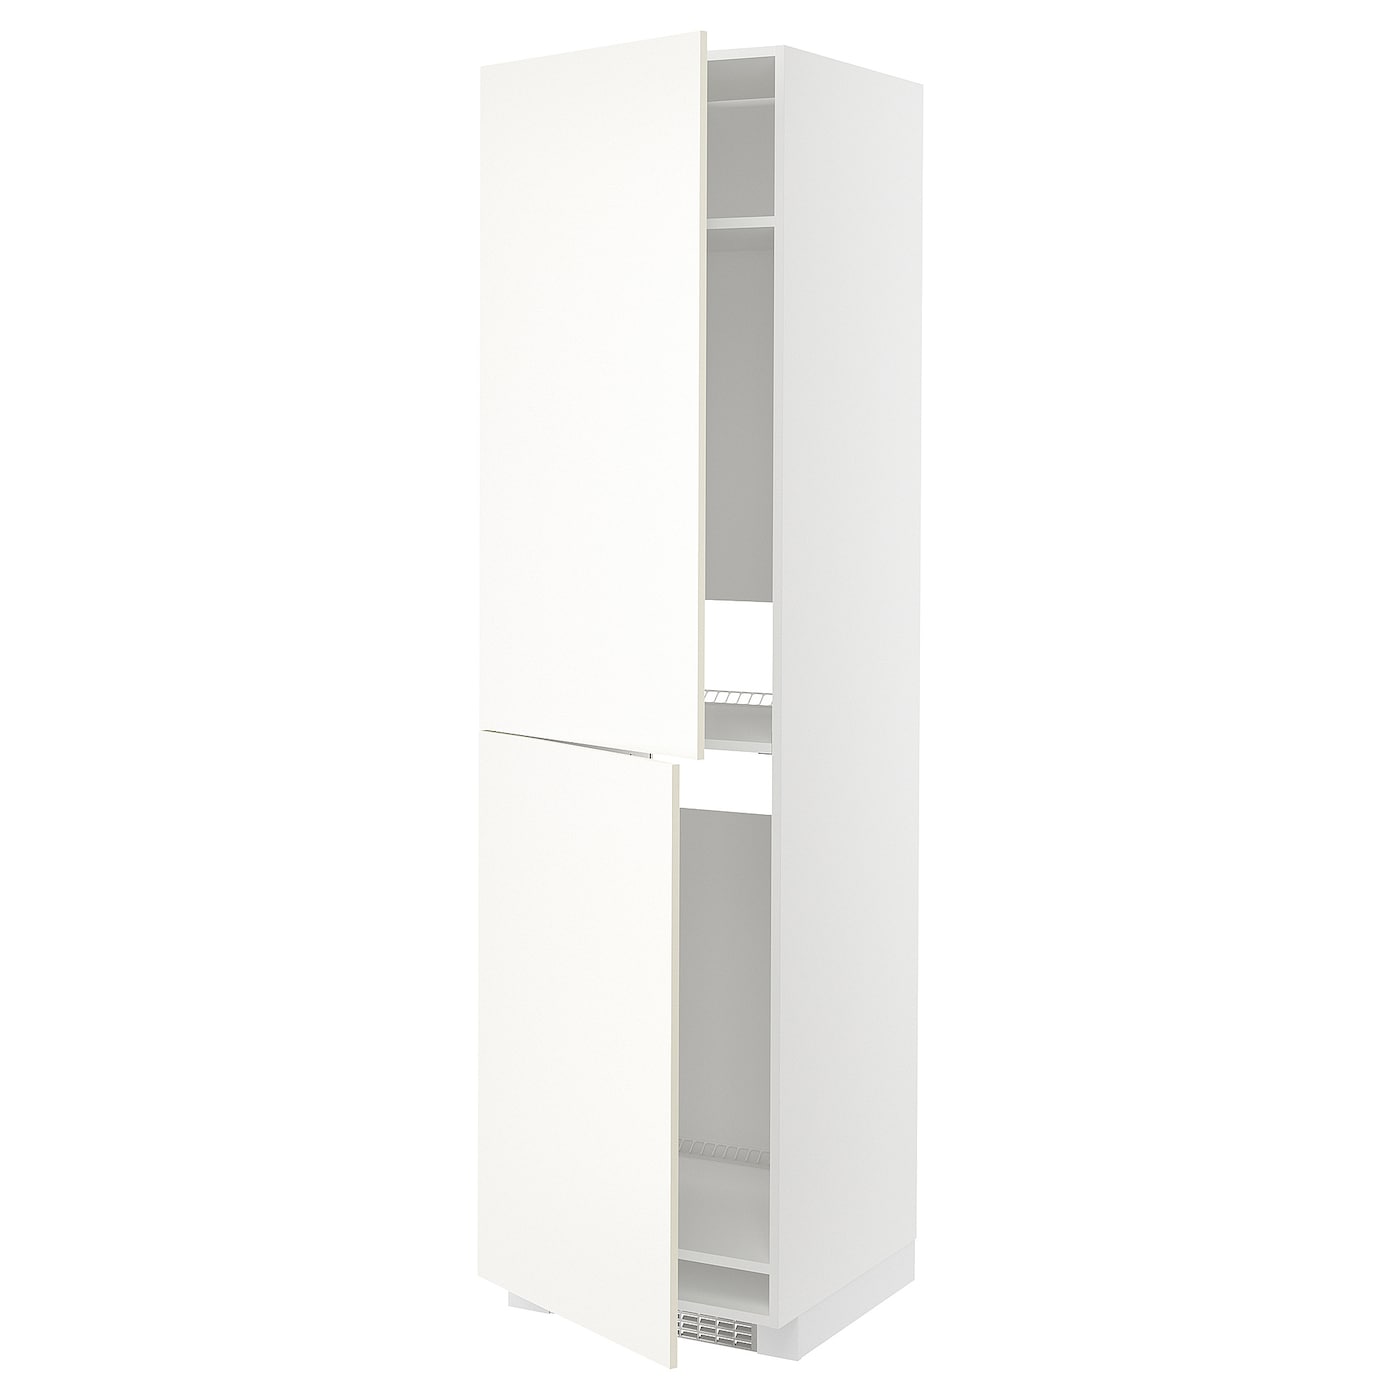 Высокий кухонный шкаф - IKEA METOD/МЕТОД ИКЕА, 220х60х60 см, белый